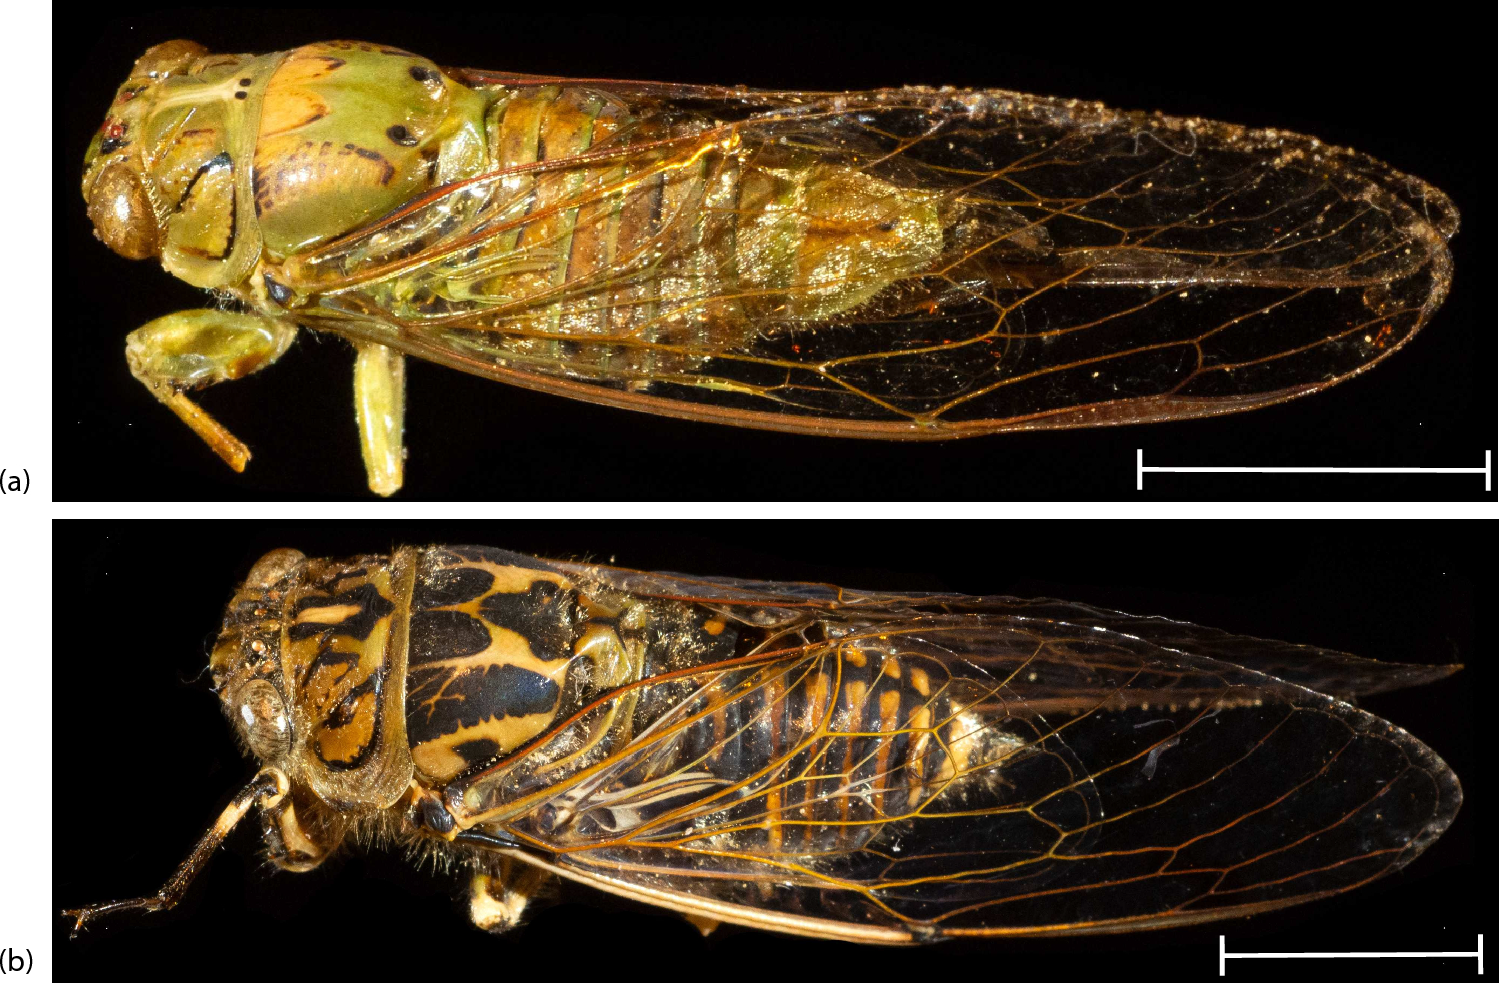 Verifying antibacterial properties of nanopillars on cicada wings